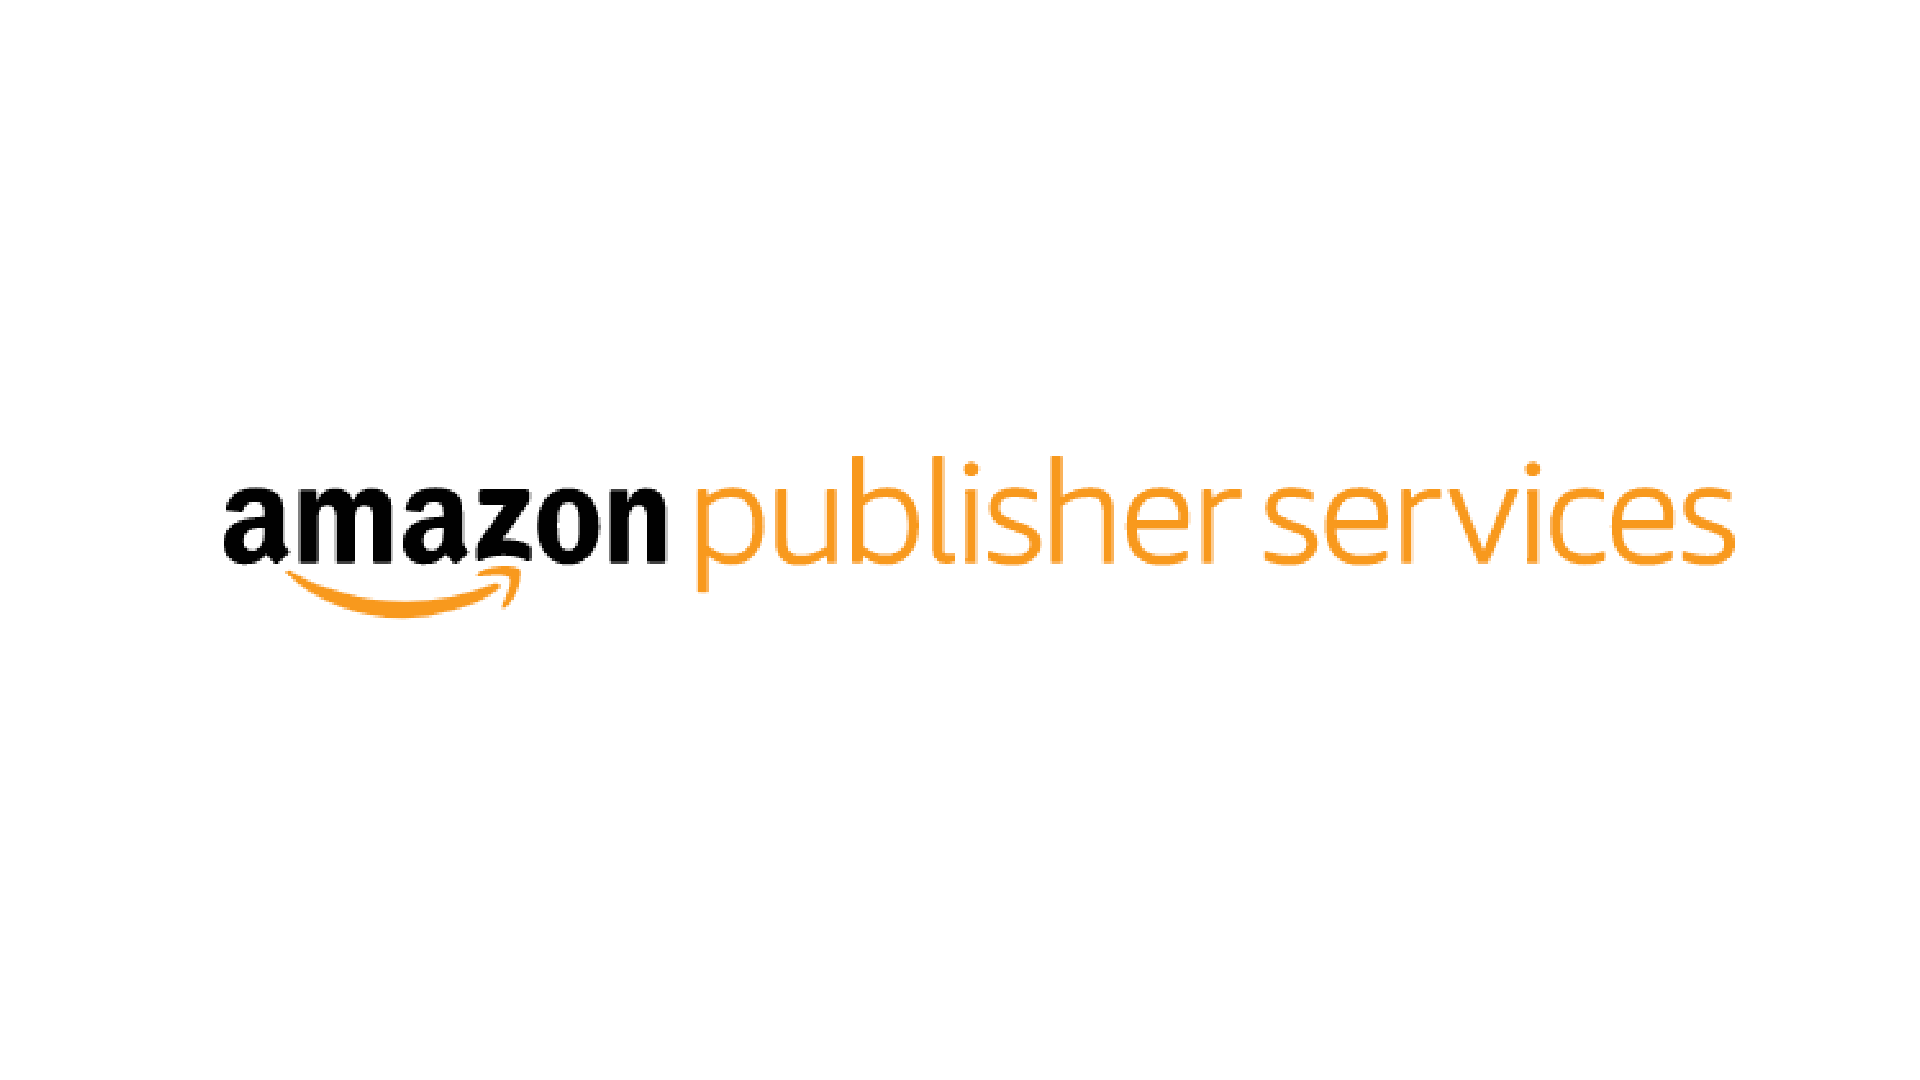 Amazon to launch an id solution based on Amazon accounts - Digiday